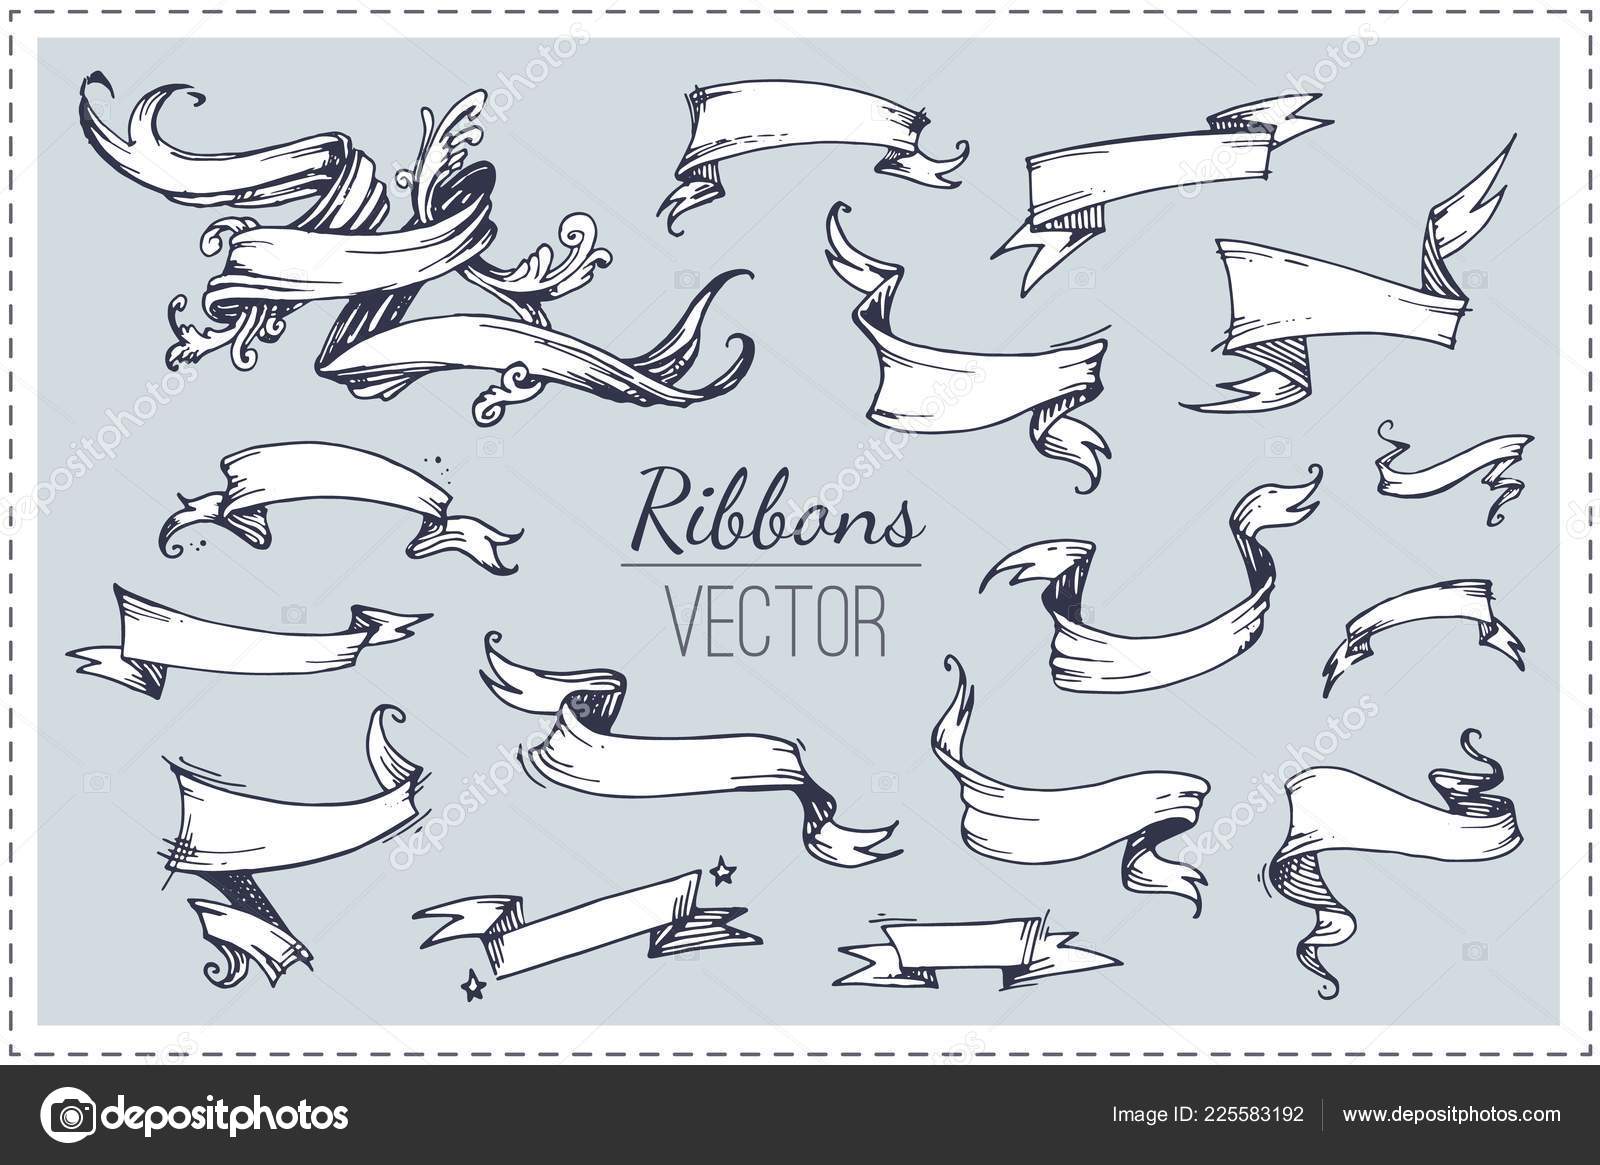 Vector Illustration Of Vintage Ribbon Banners. Hand Drawn Set